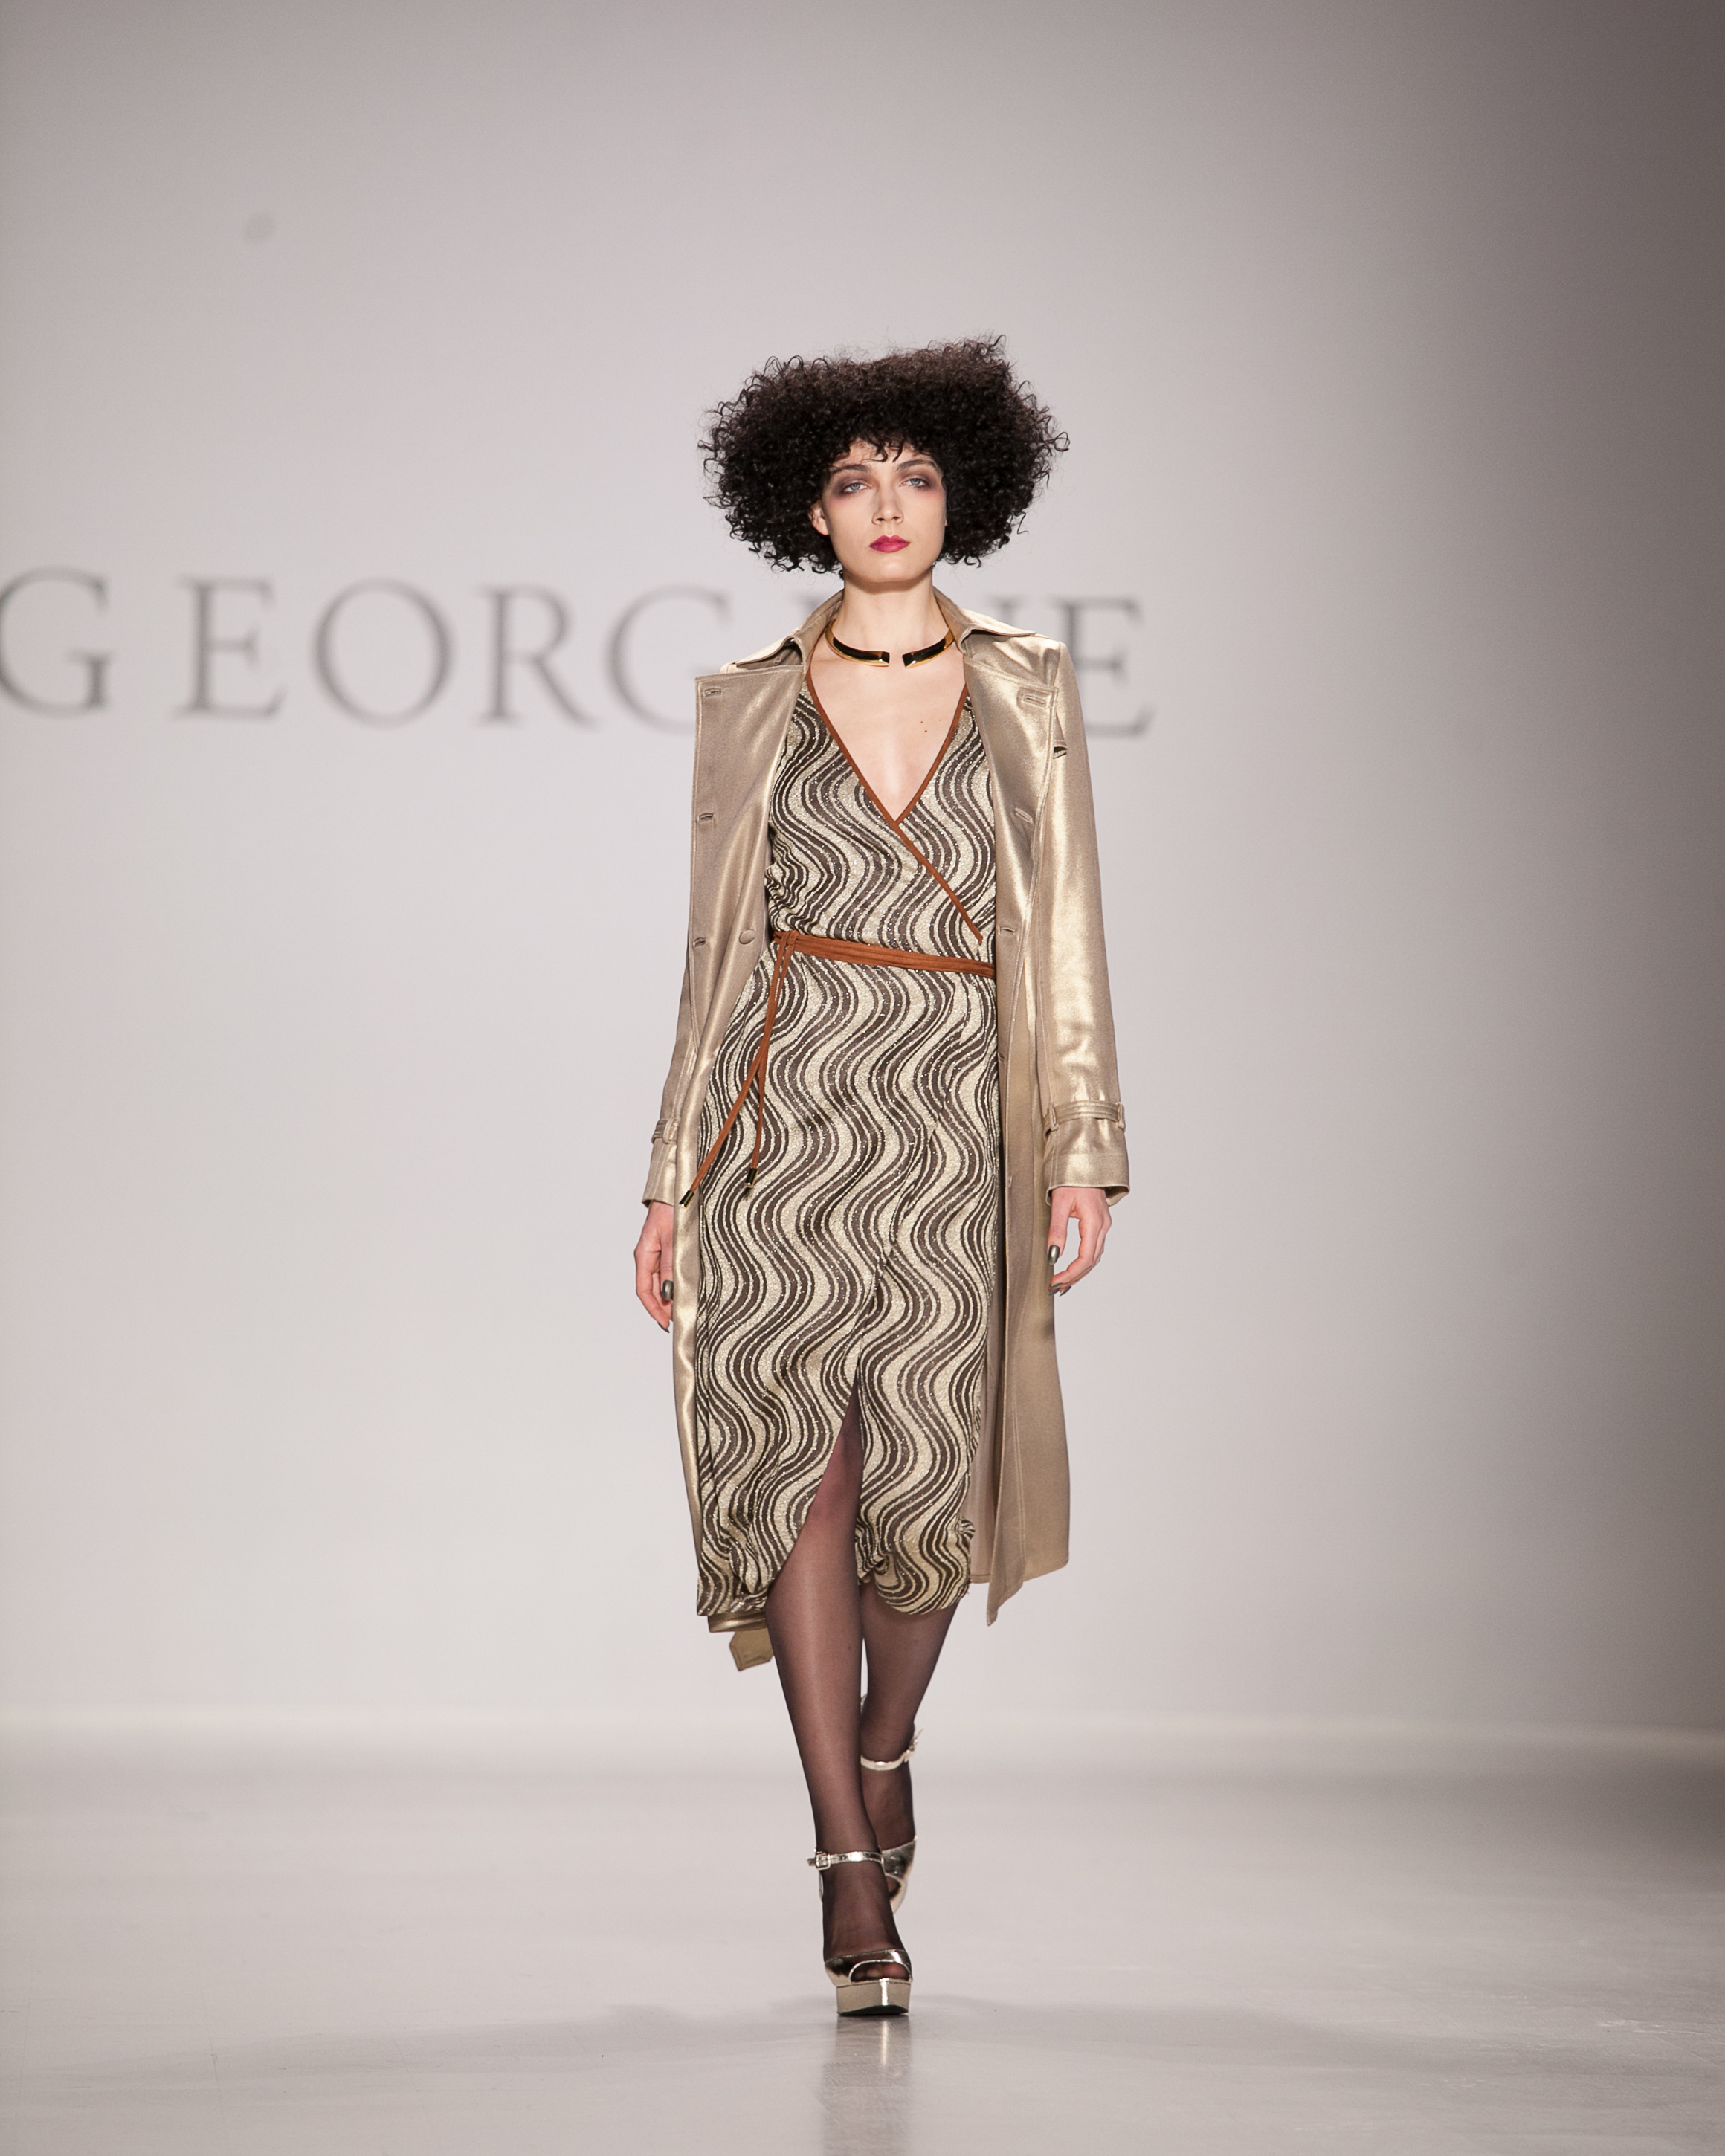 021-Georgine-New-York-Fashion-Week-Fall-Winter-2015-Shana-Schnur-Photography-021.jpg